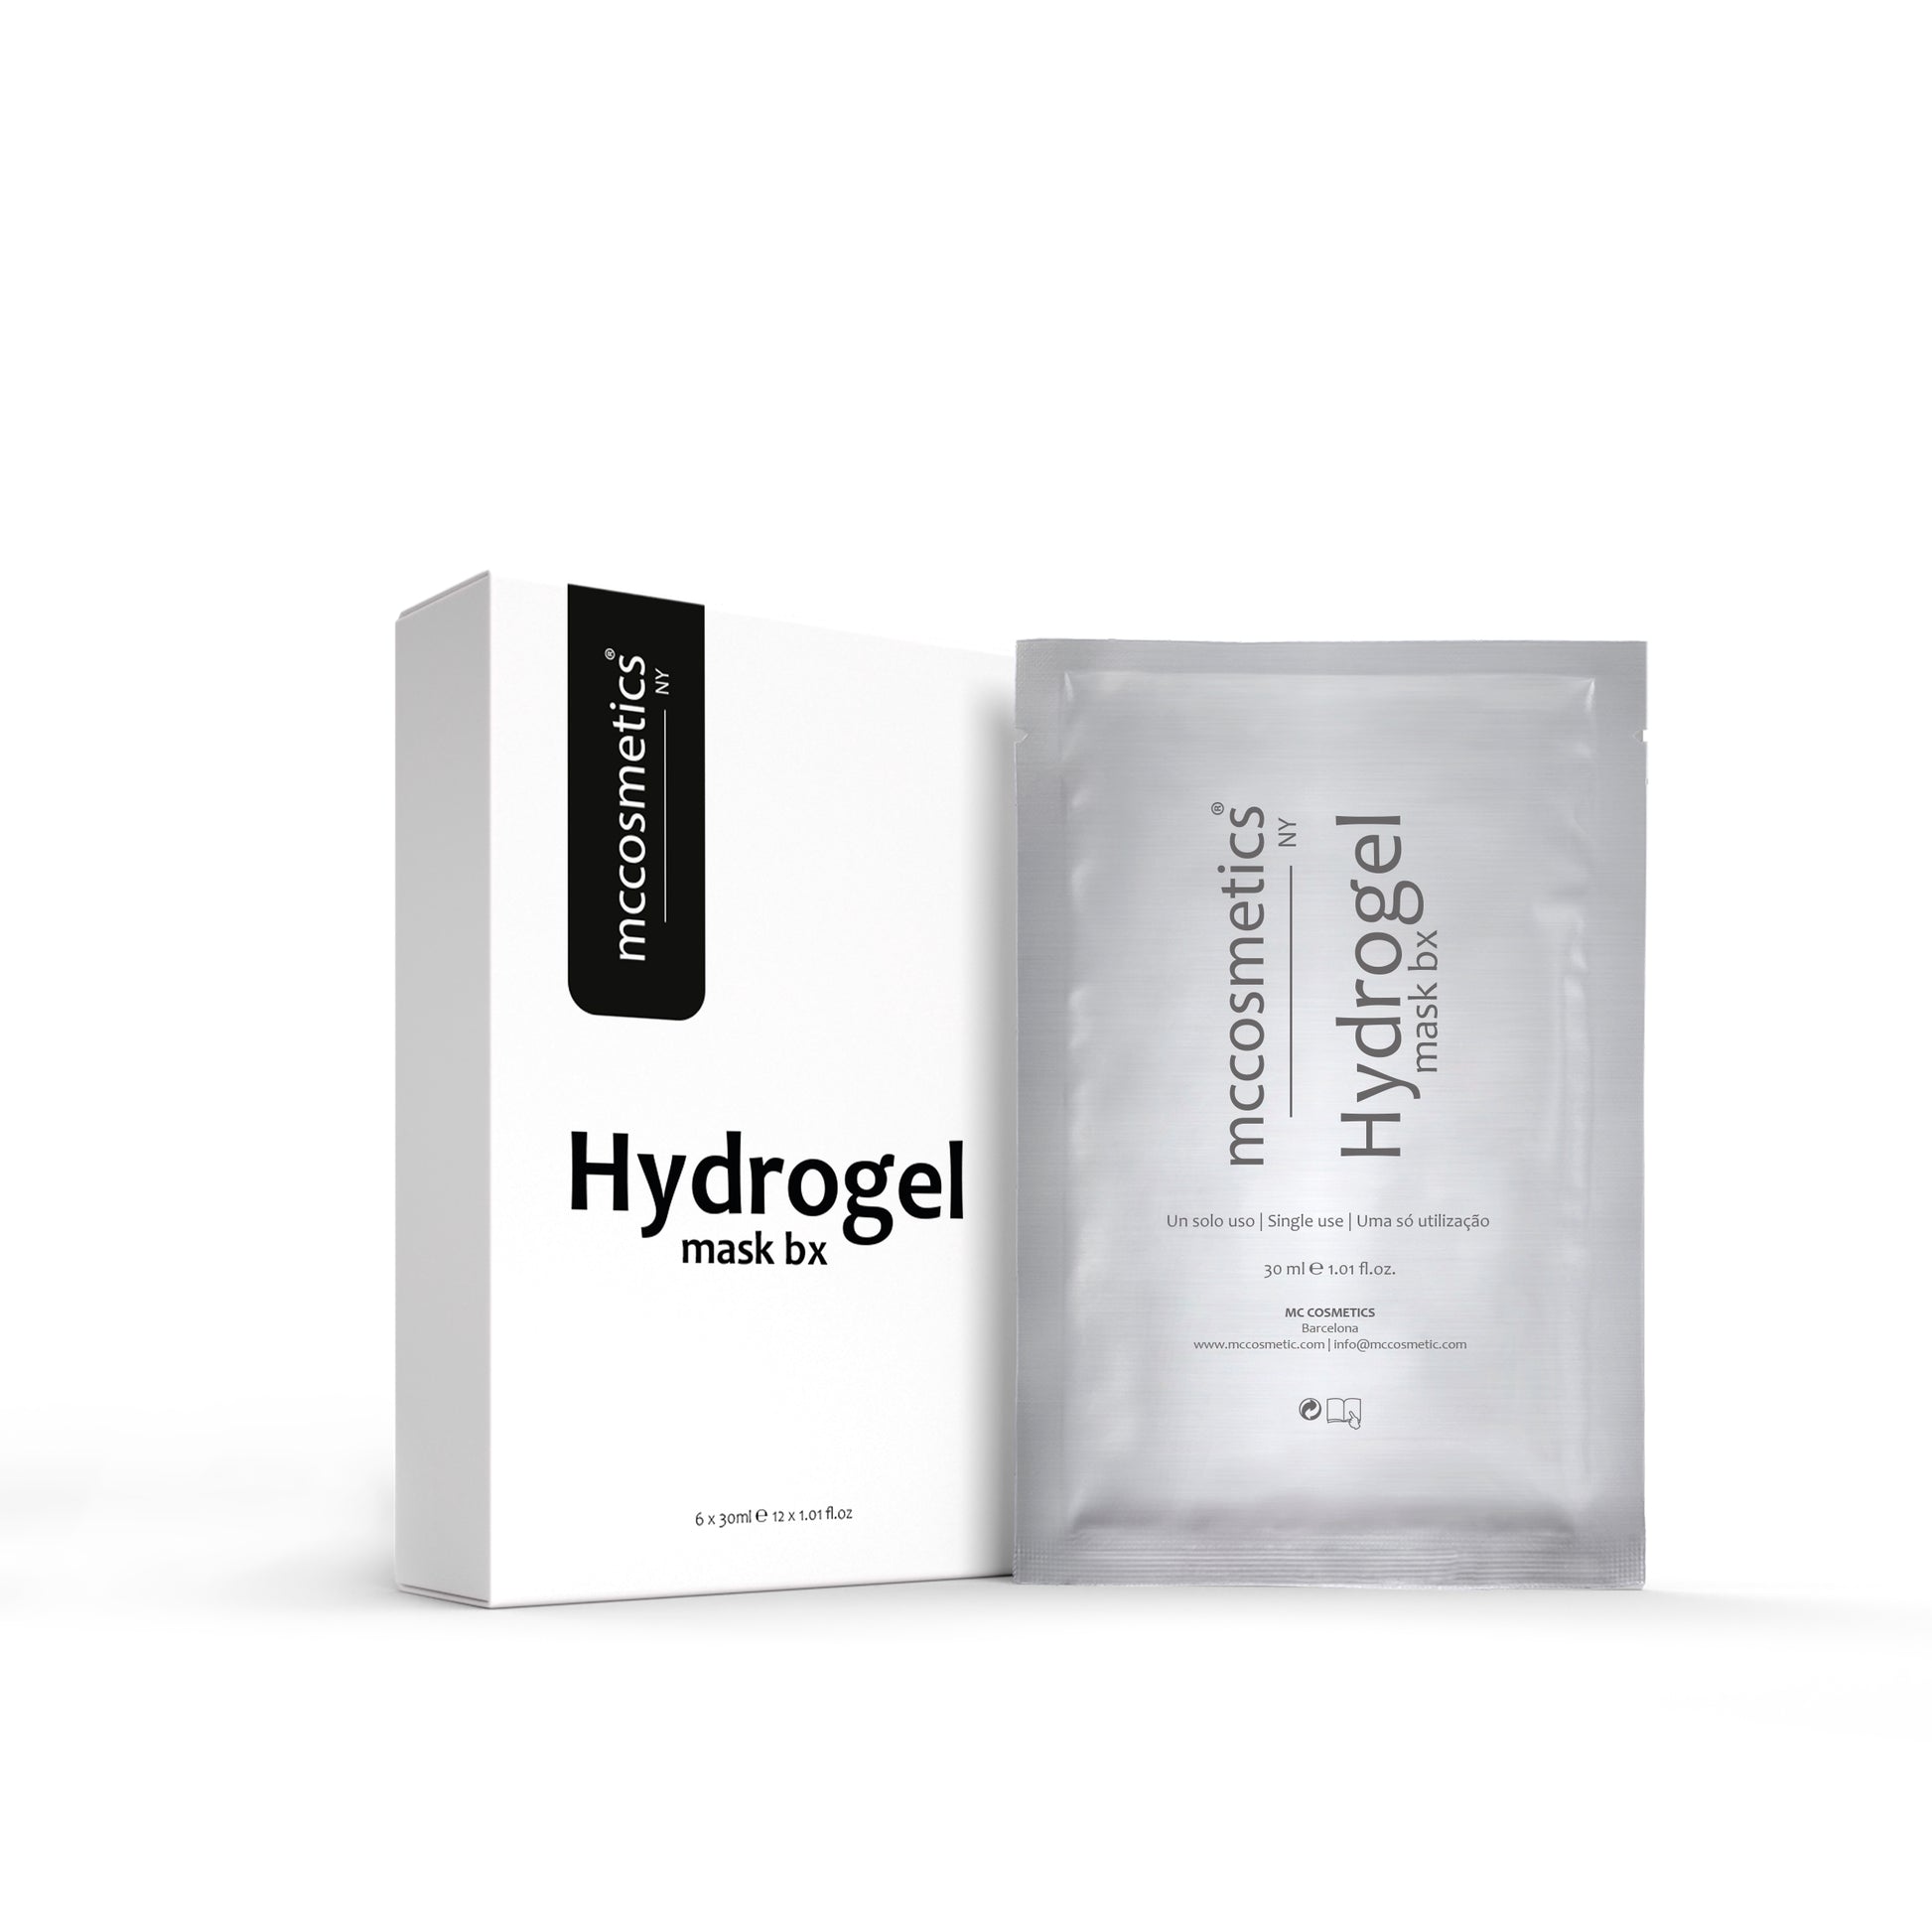 hydrogel mask - mccosmetics.ny